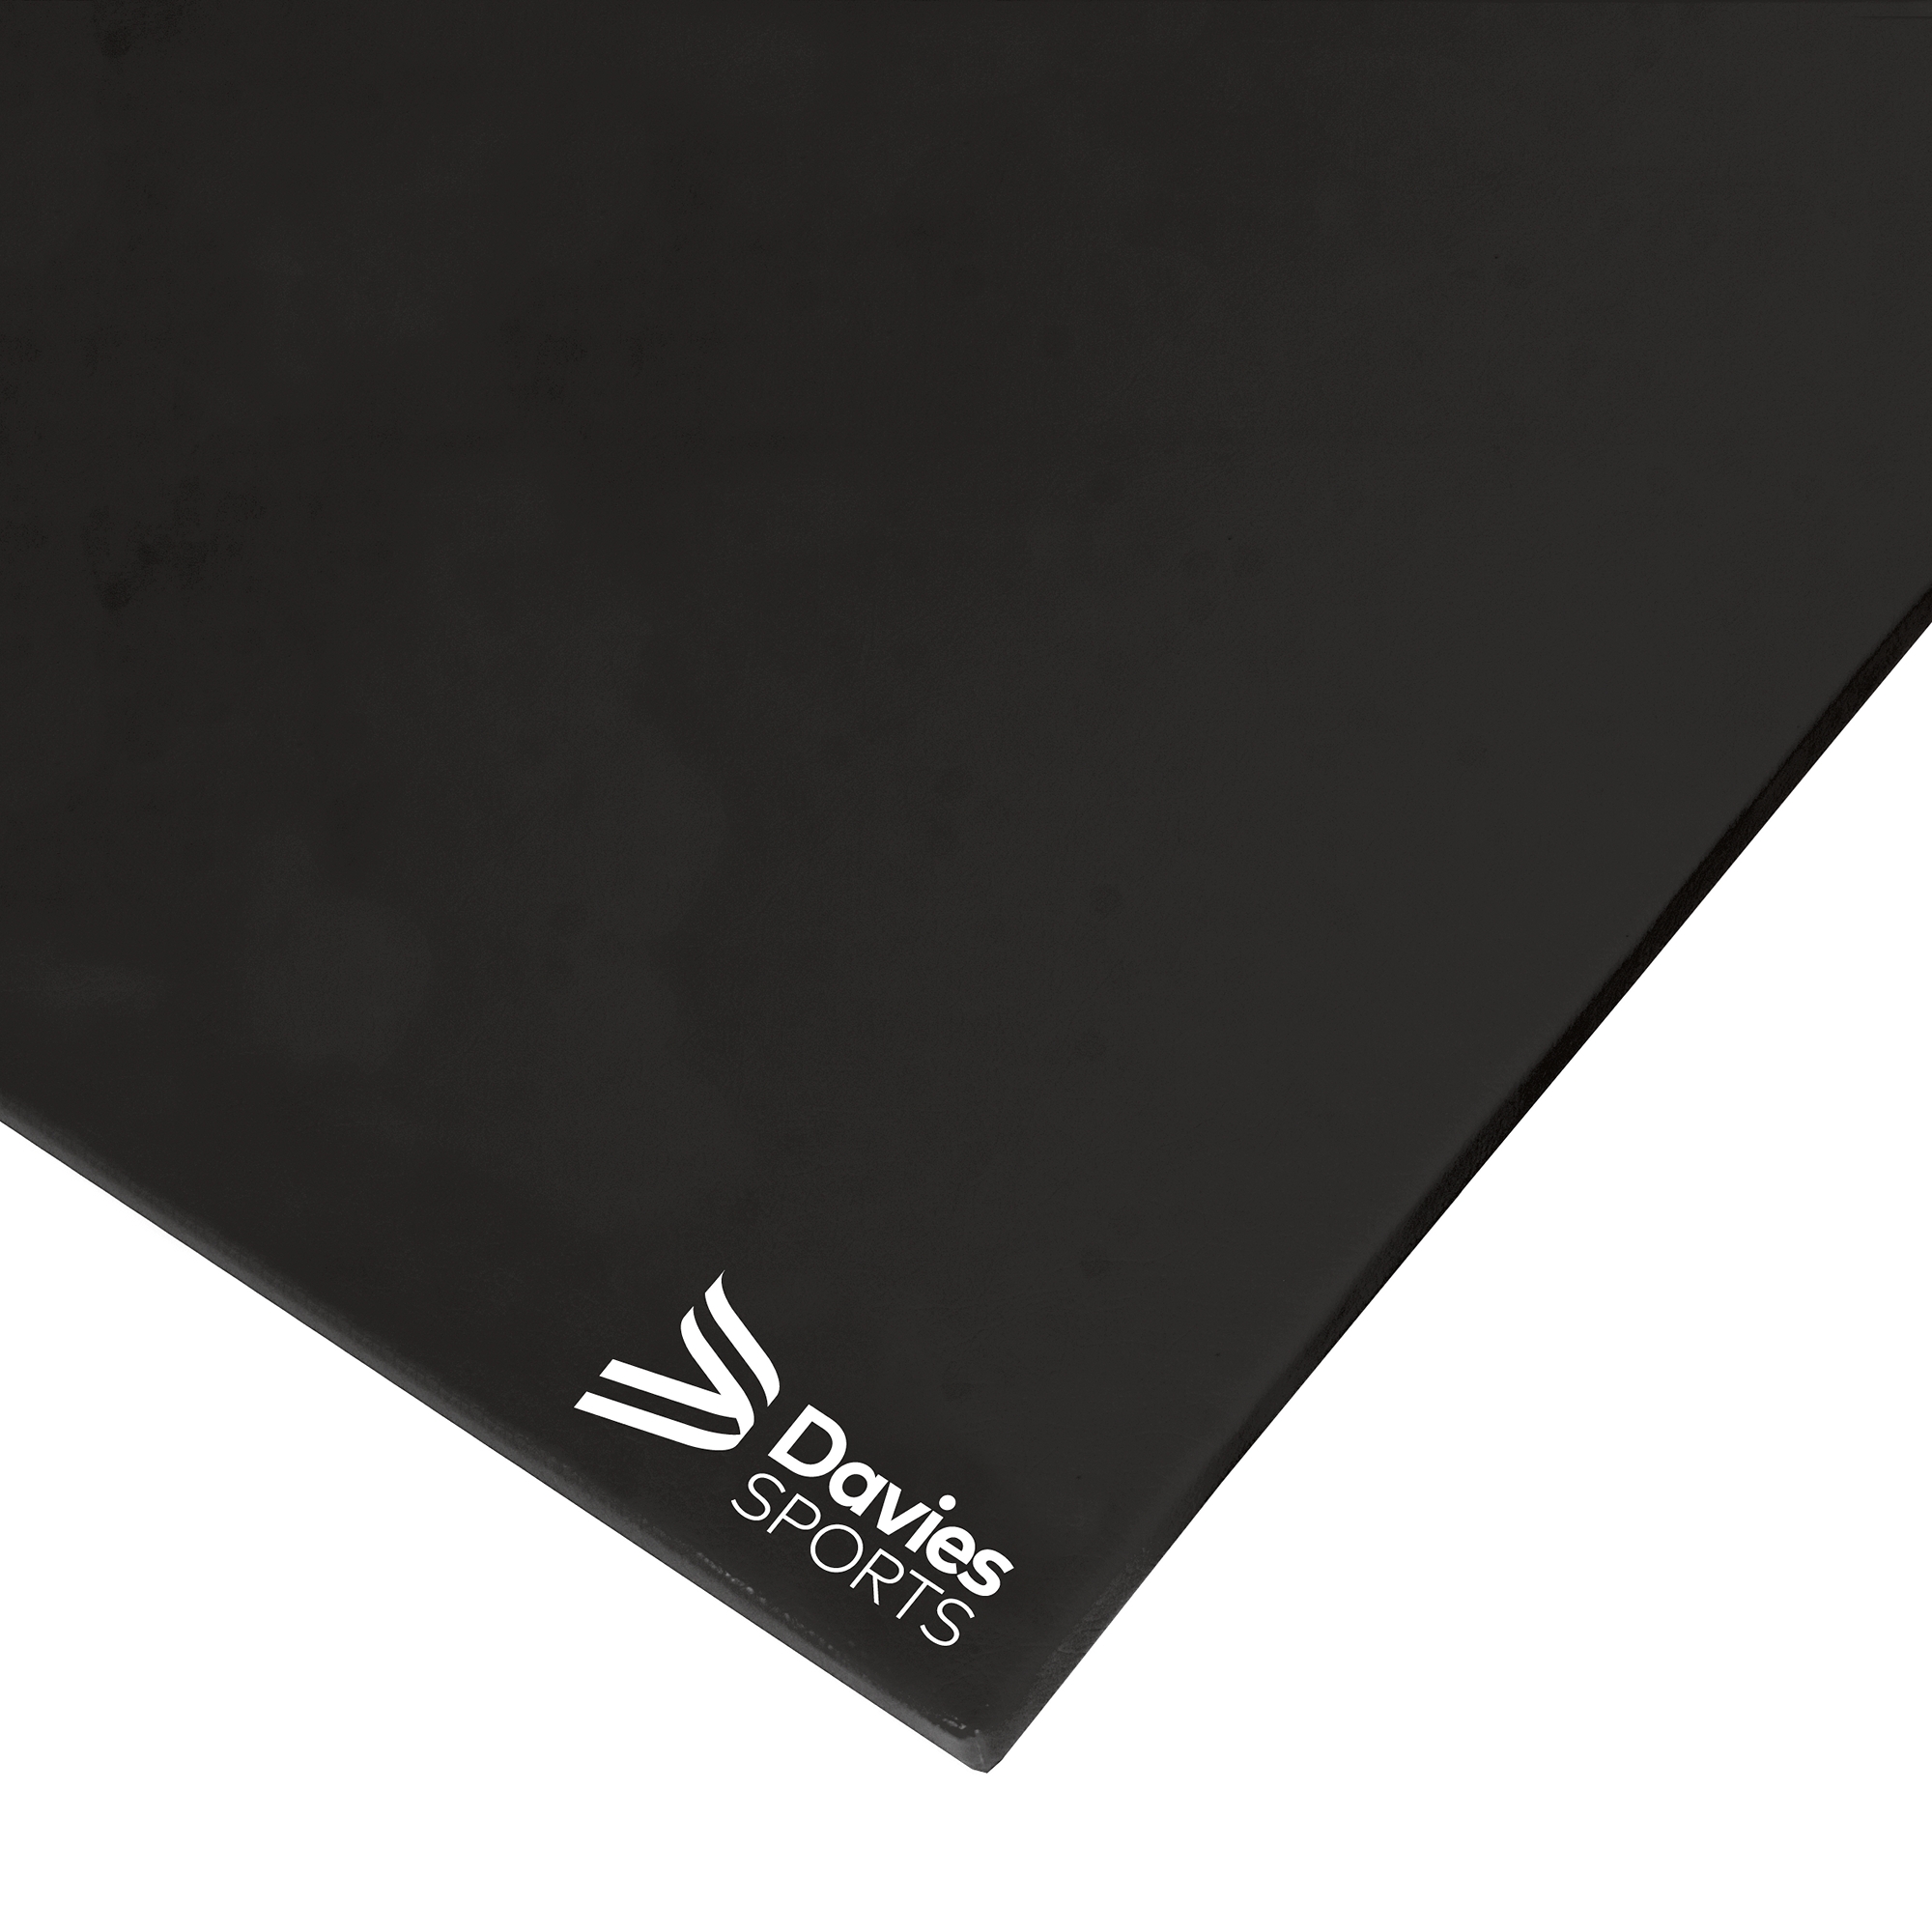 Davies Sports Medium Weight Gym Mat Standard Black Cellular Base - 1.83m x 1.22m x 25mm